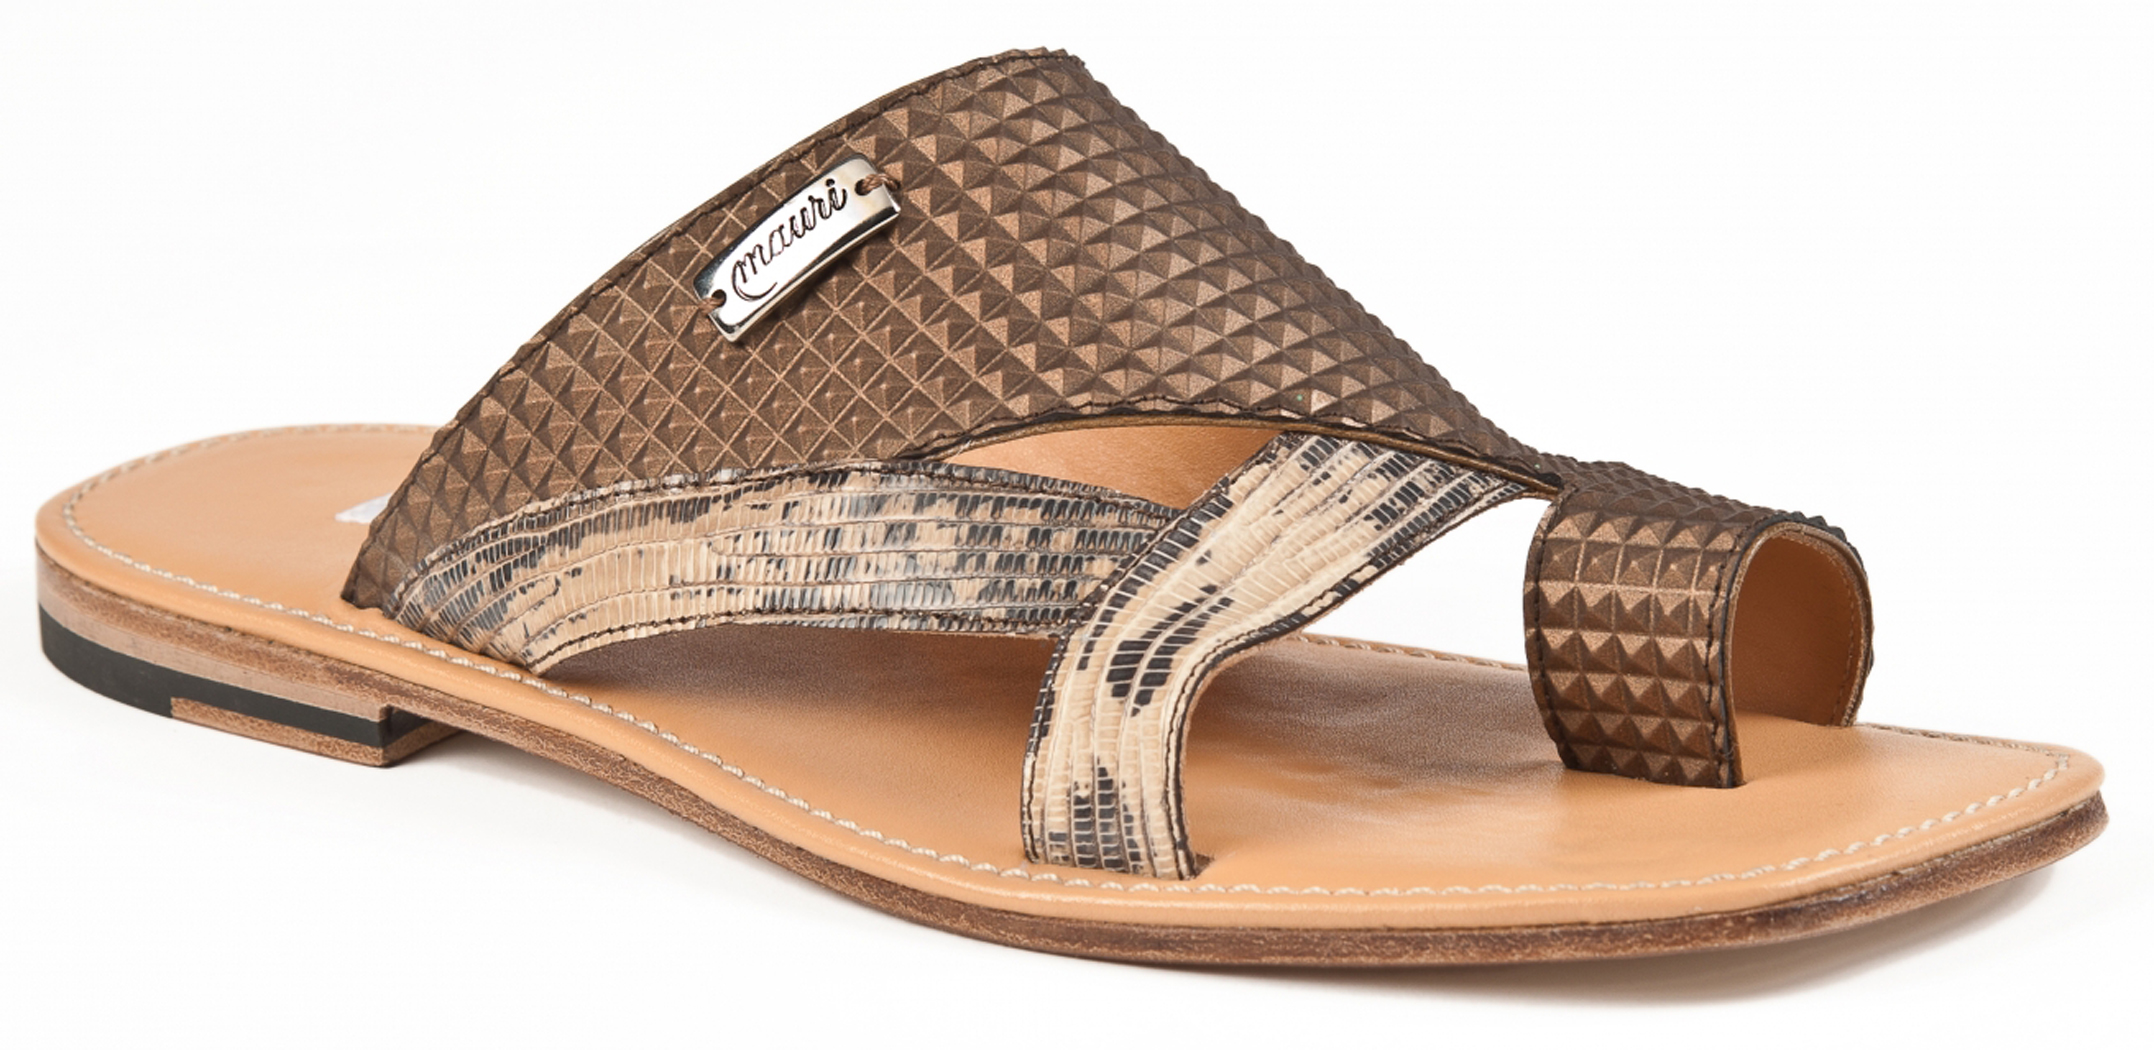 Mauri "1260/5" Brown / Bronze Genuine Tejus / Fabric Slide-In Open Toe Sandals.